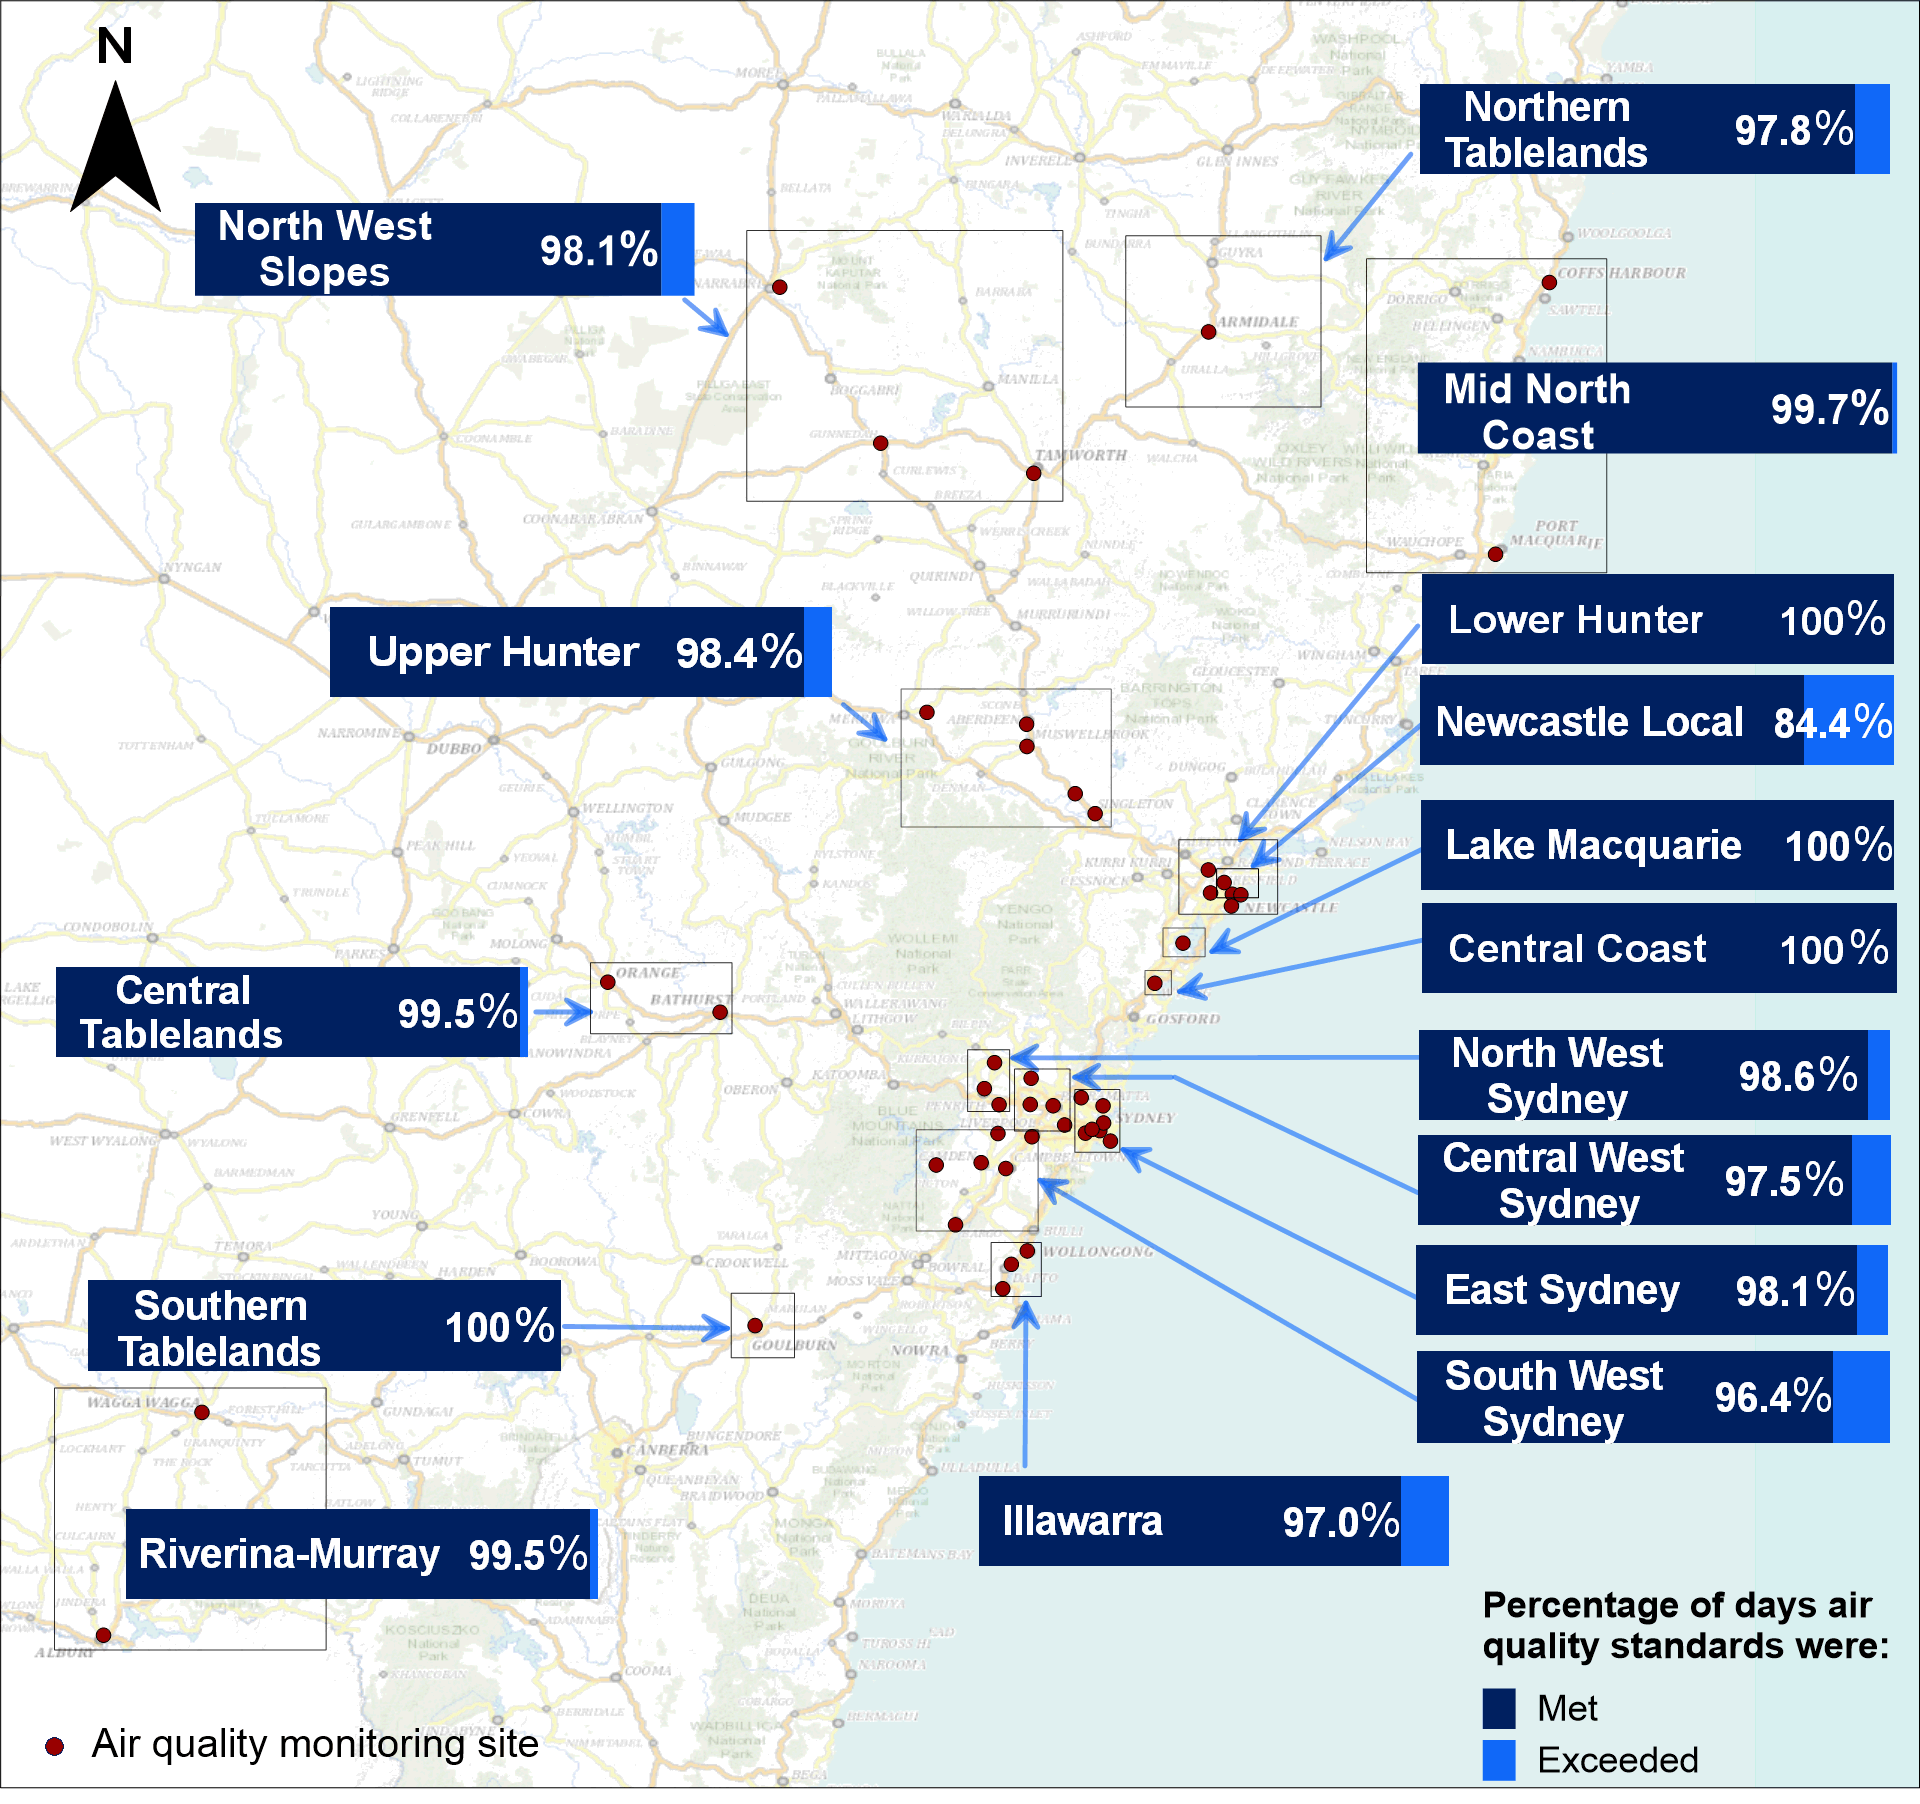 Regional summary map